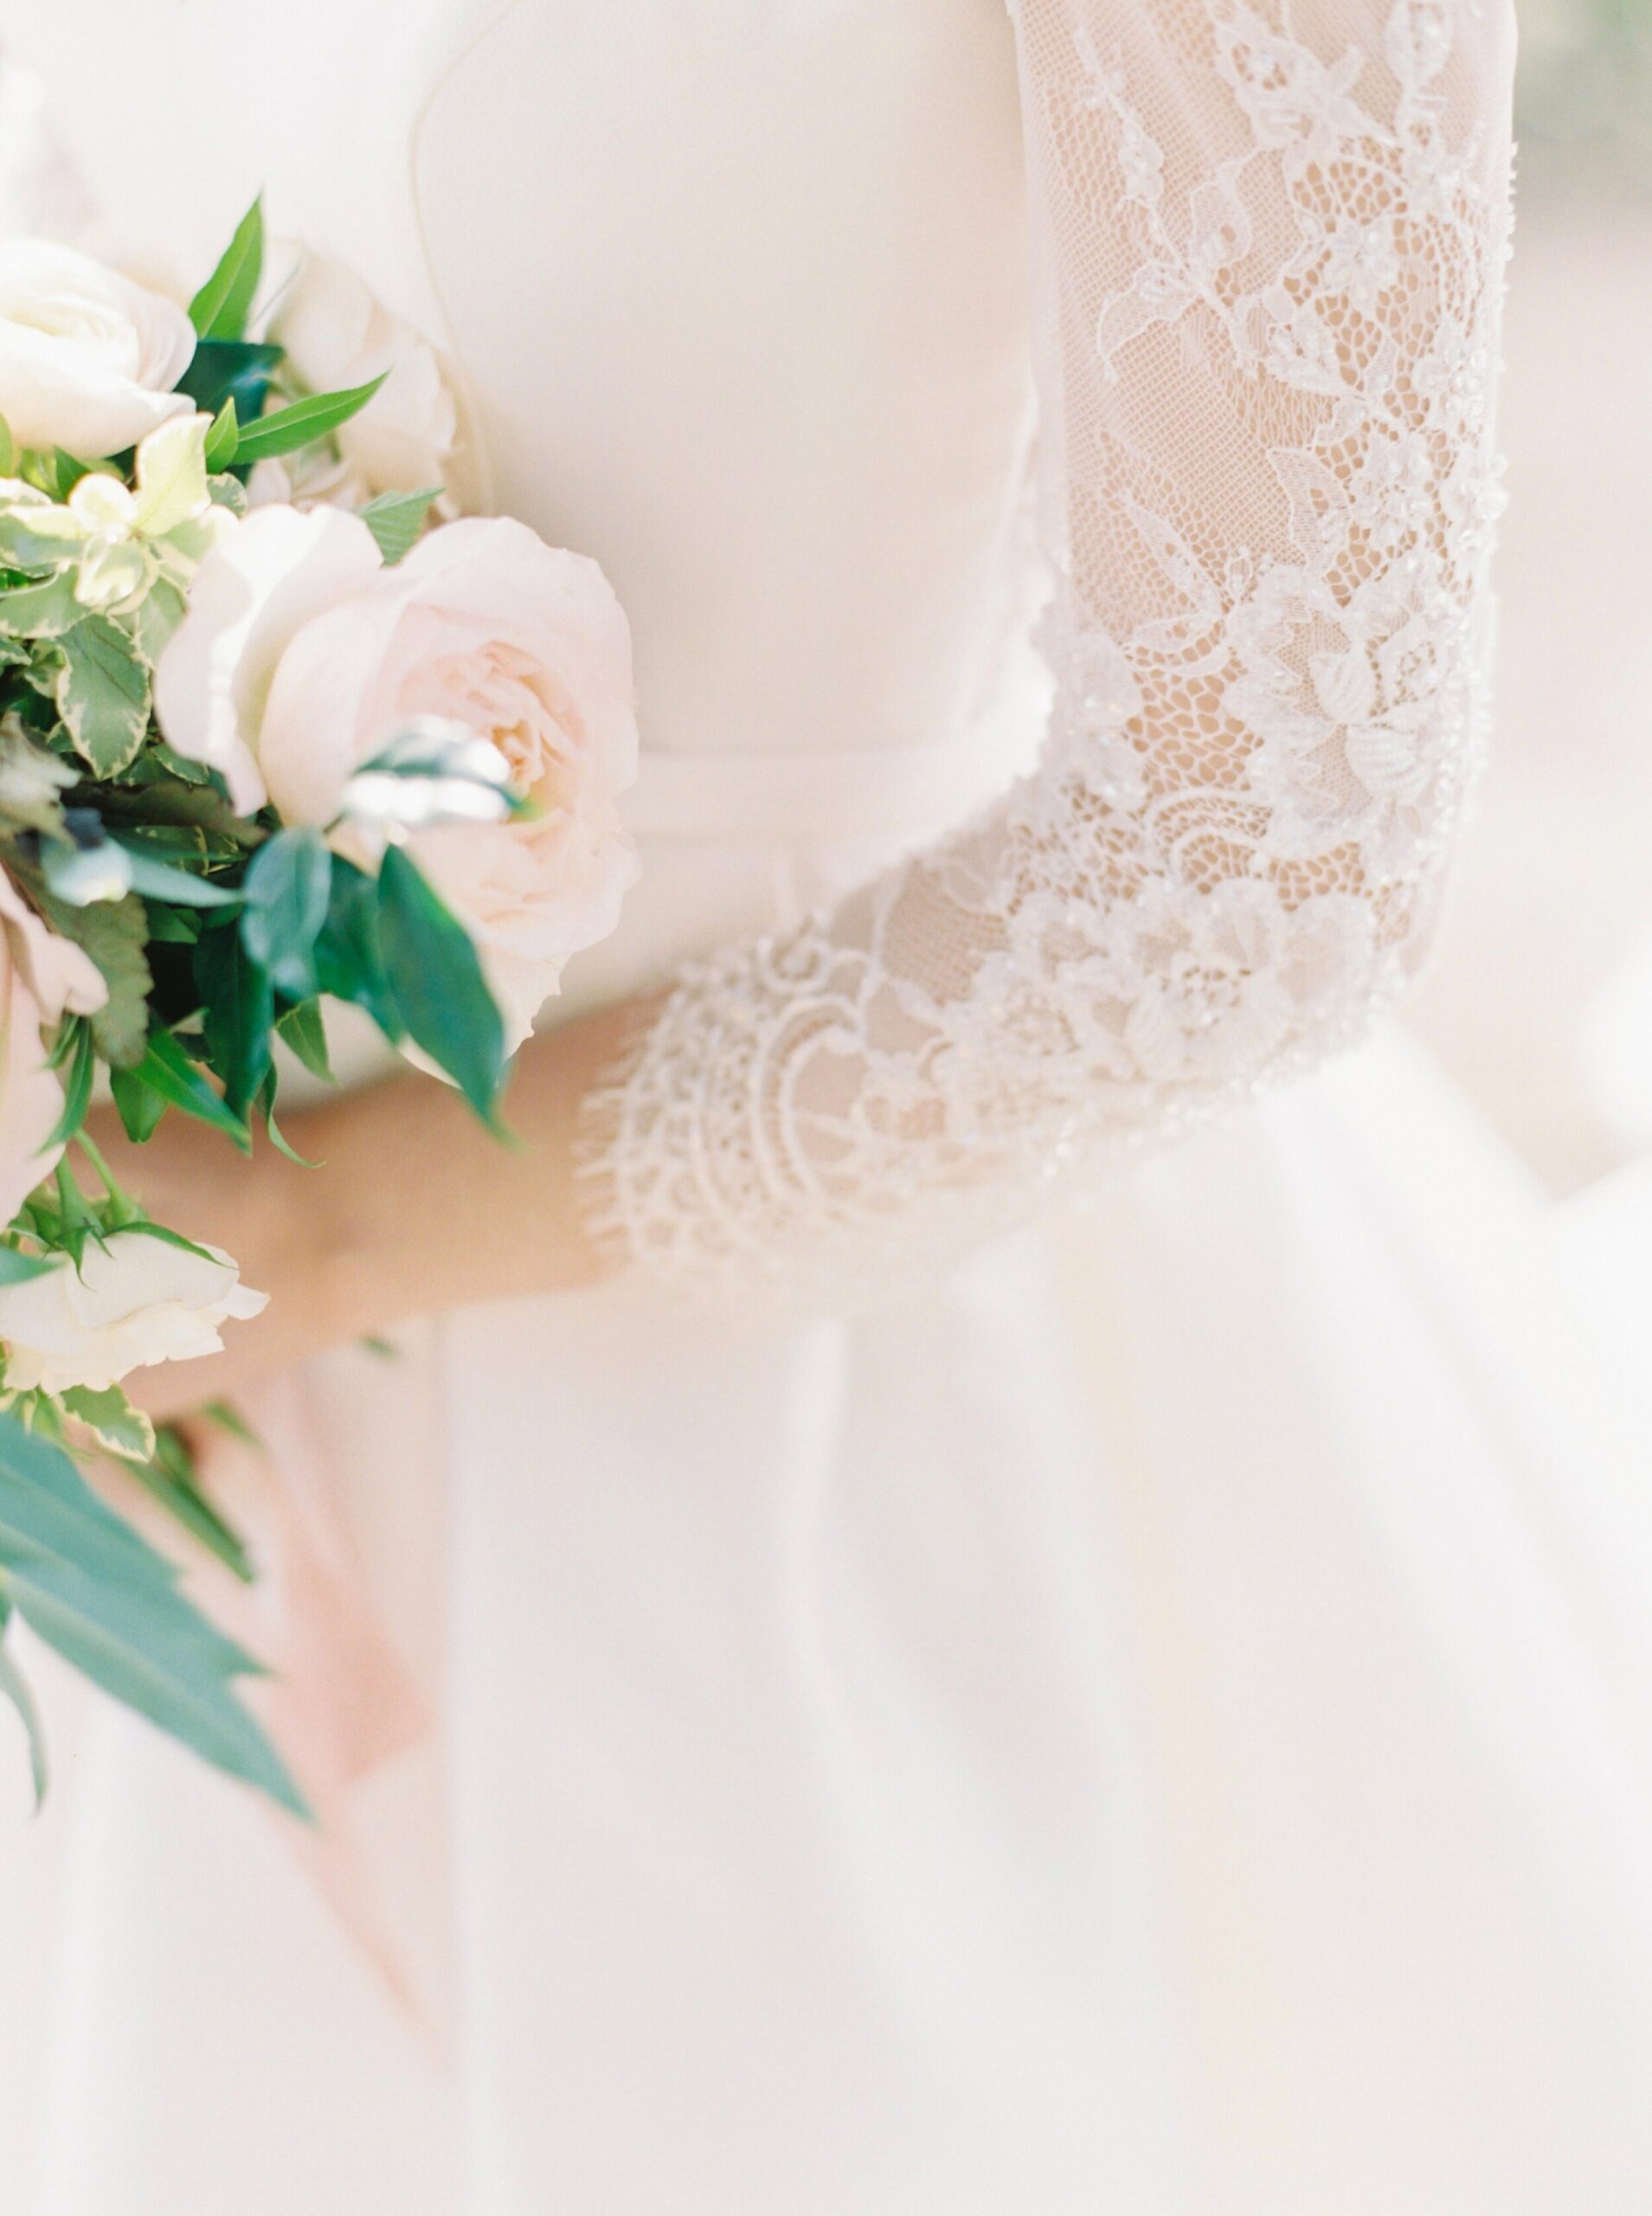  bridal portrait | long sleeve lace wedding dress inspiration | Fairmont Banff Springs hotel wedding photographers | fine art film photography | portra 400 